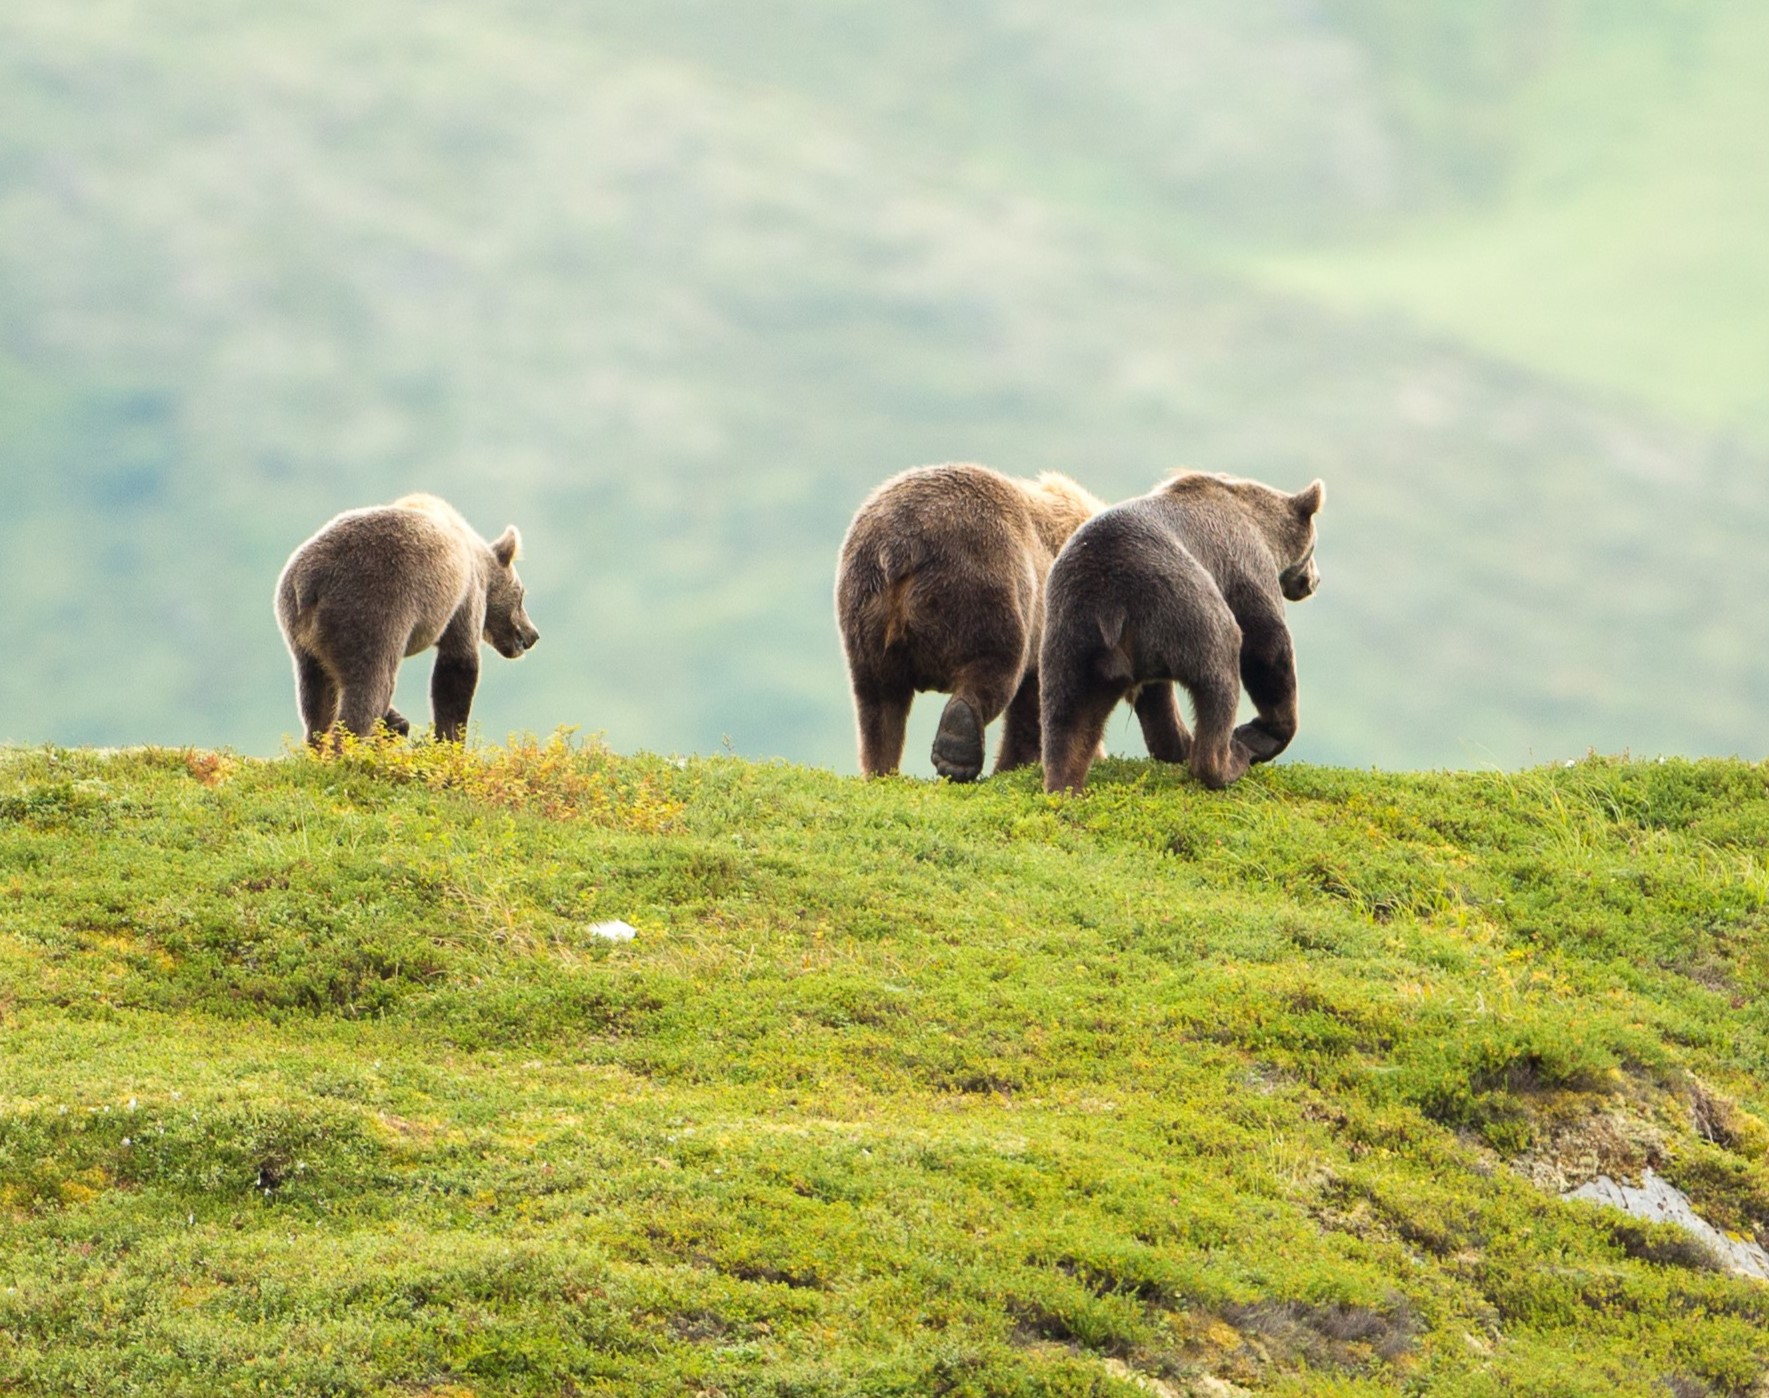 Three bears walk across a grassy ridge